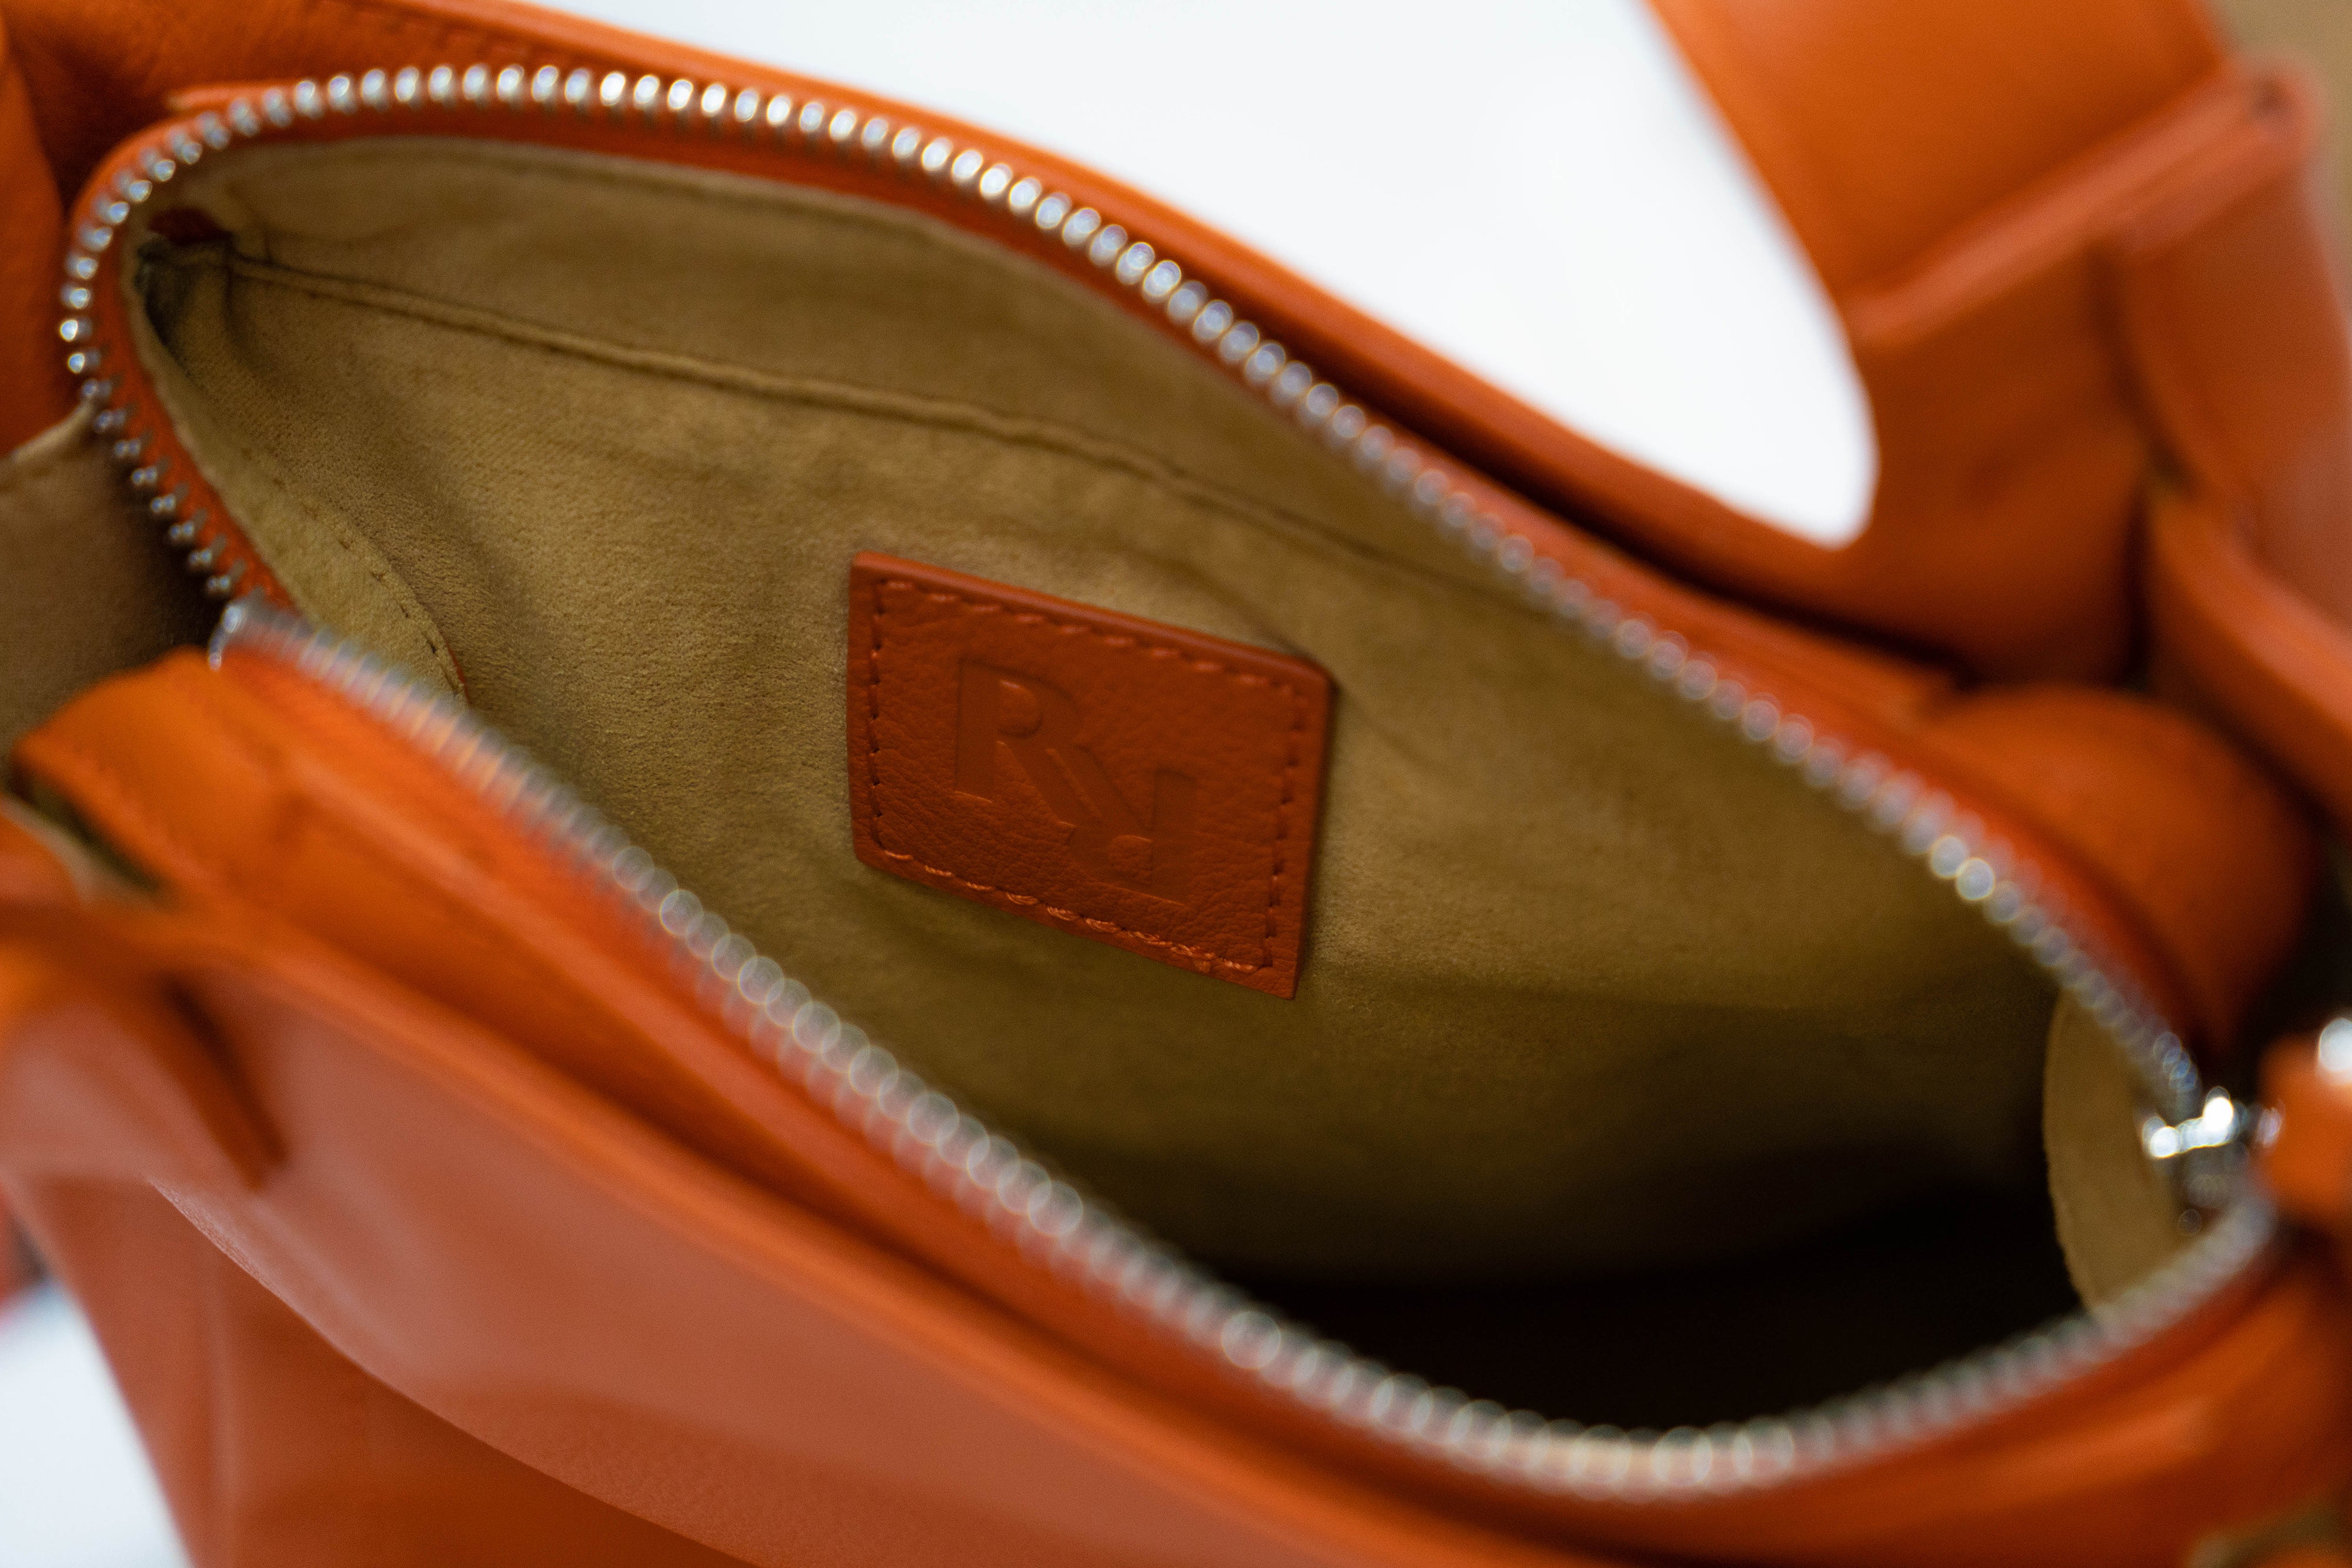 Mini tote orange leather bag and crossbody